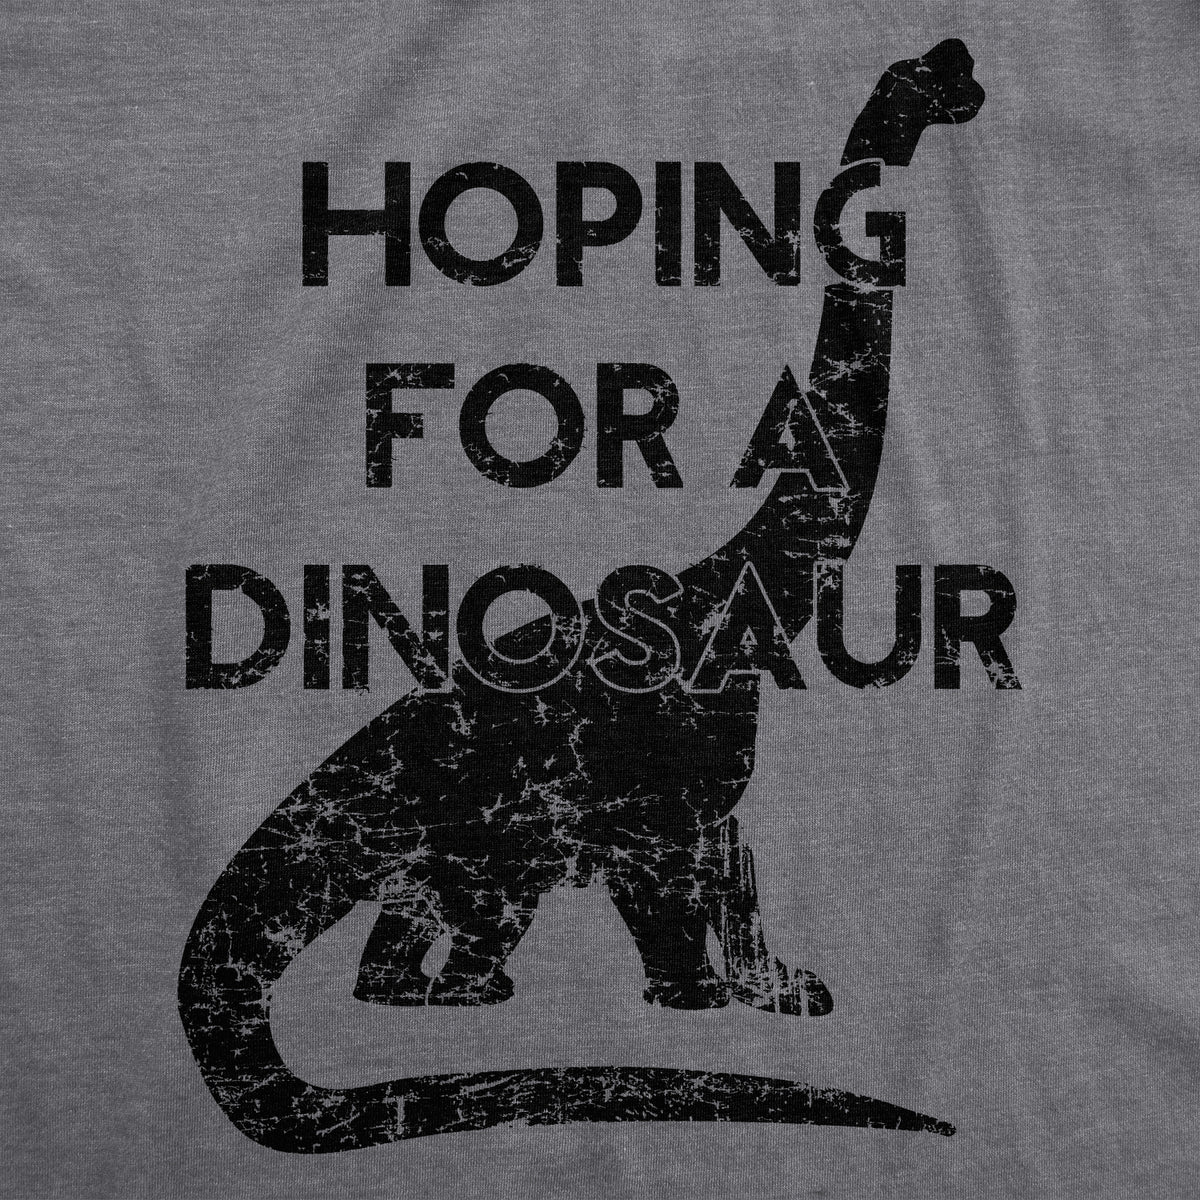 Hoping For A Dinosaur Maternity T Shirt